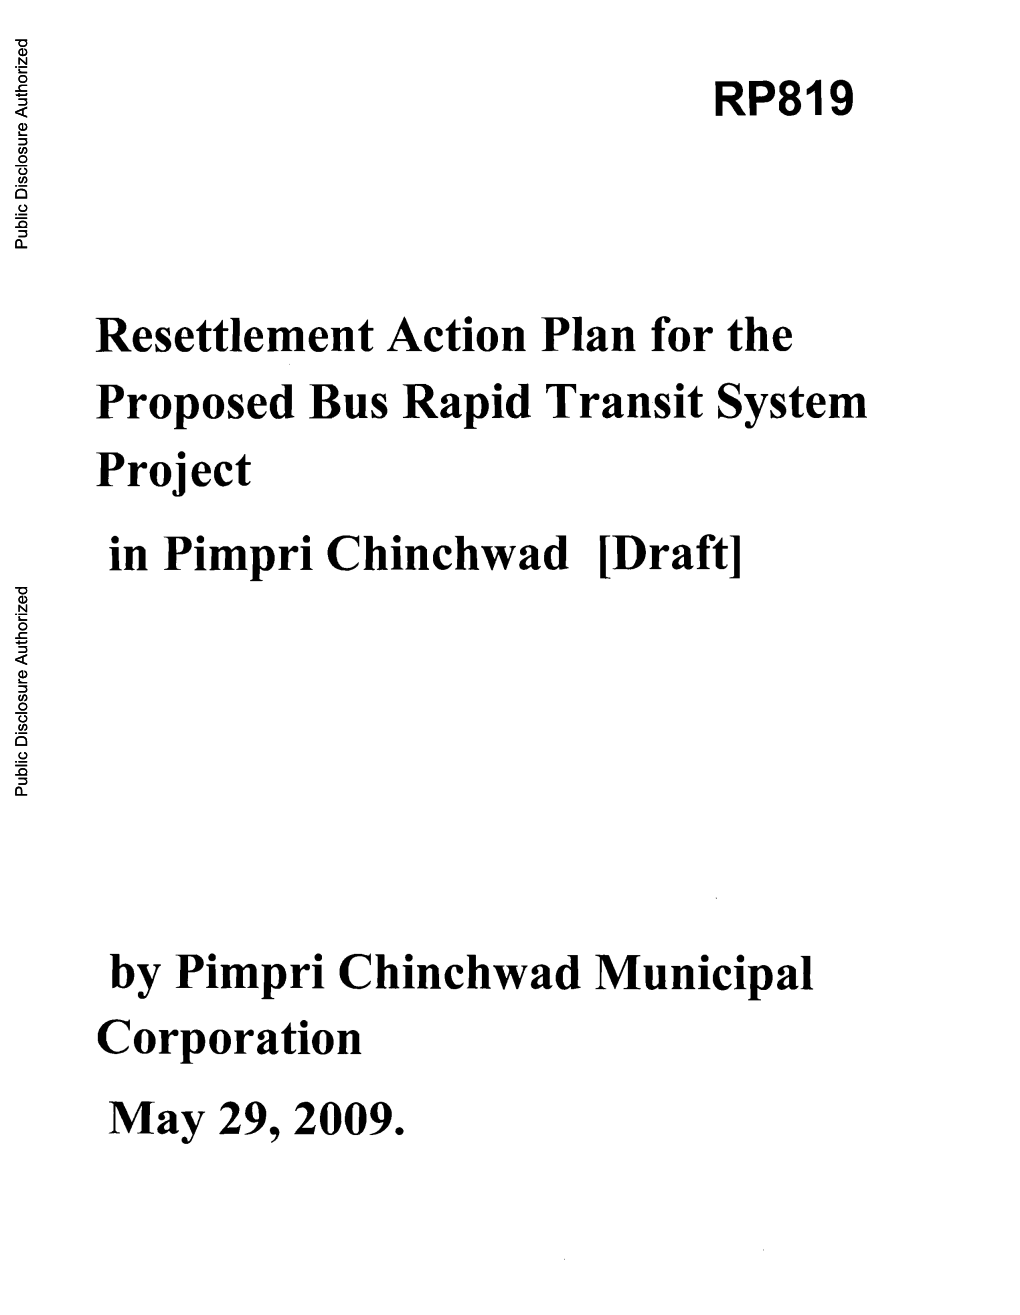 [Draft] by Pimpri Chinchwad Municipal